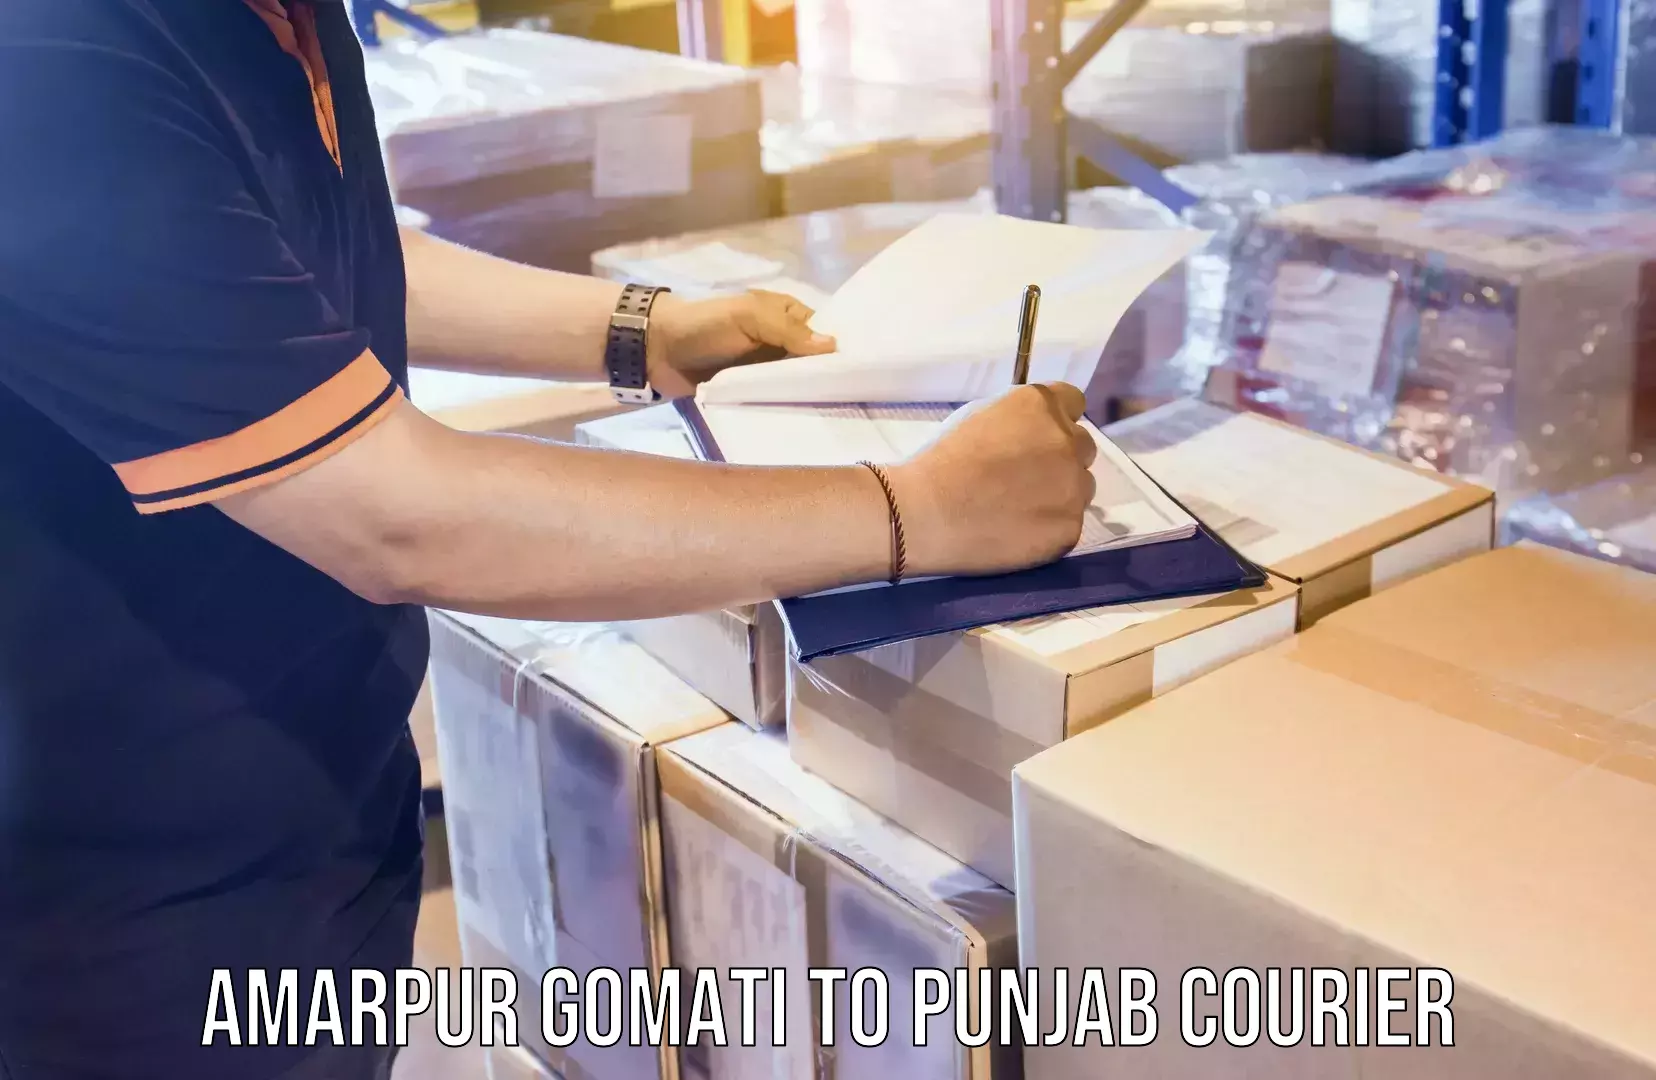 Online courier booking Amarpur Gomati to Punjab